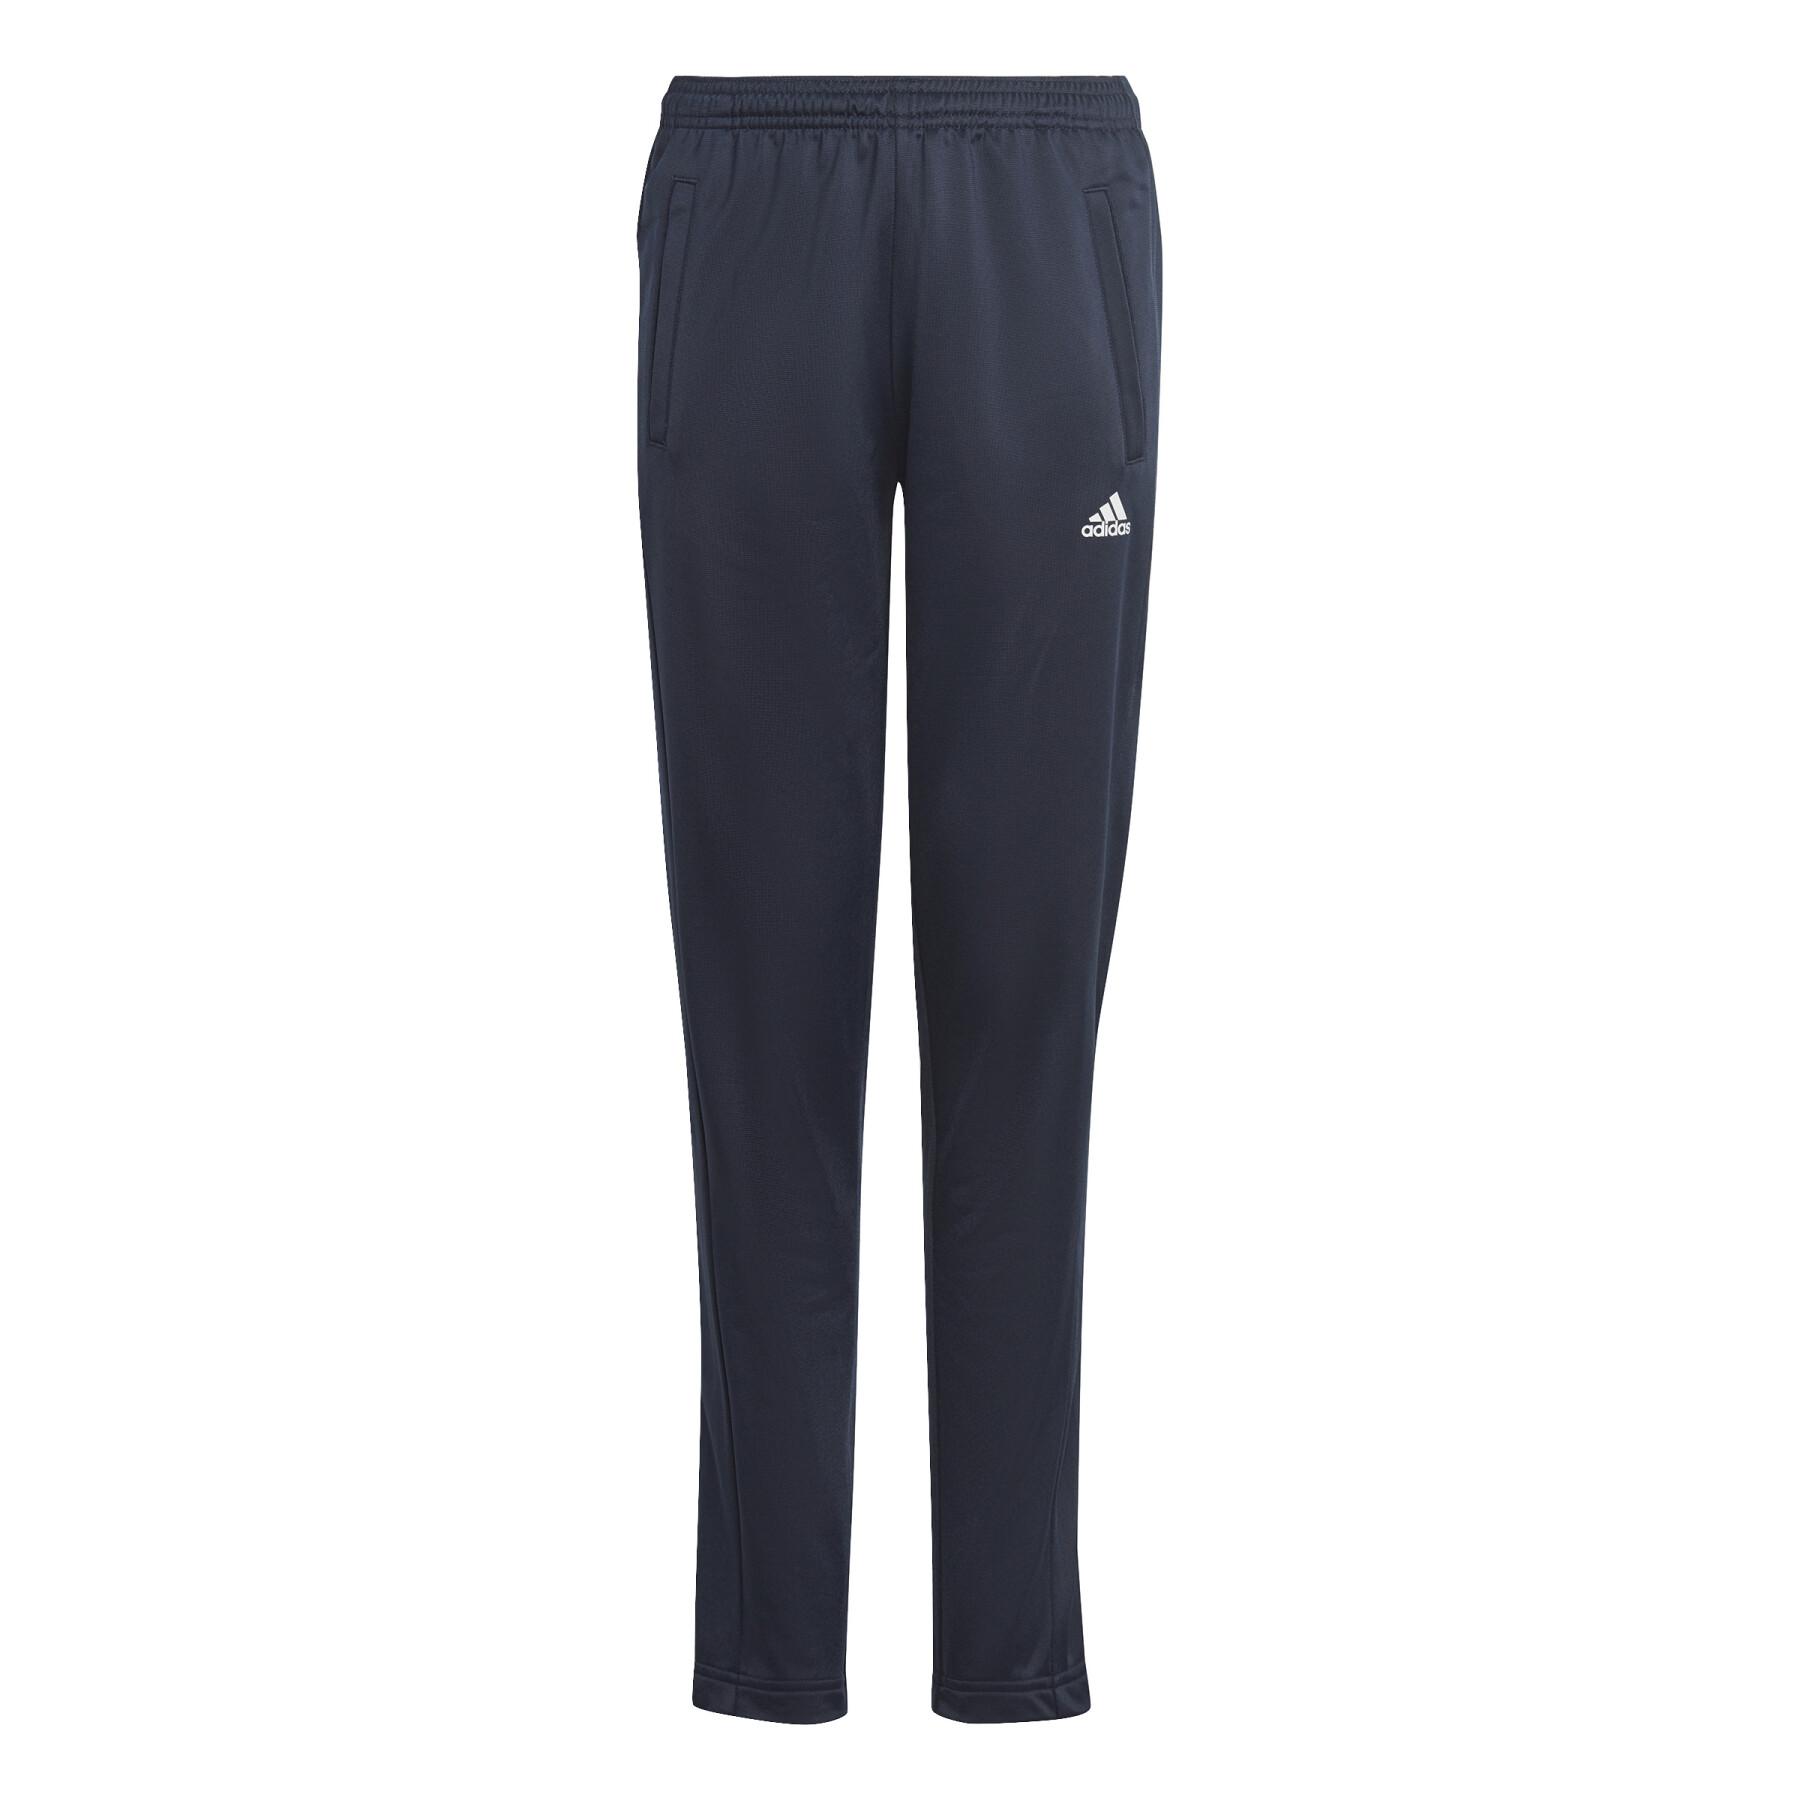 Junior Adidas Originals Adicolor Track Pants GN7485 x6 Option 2 10 95